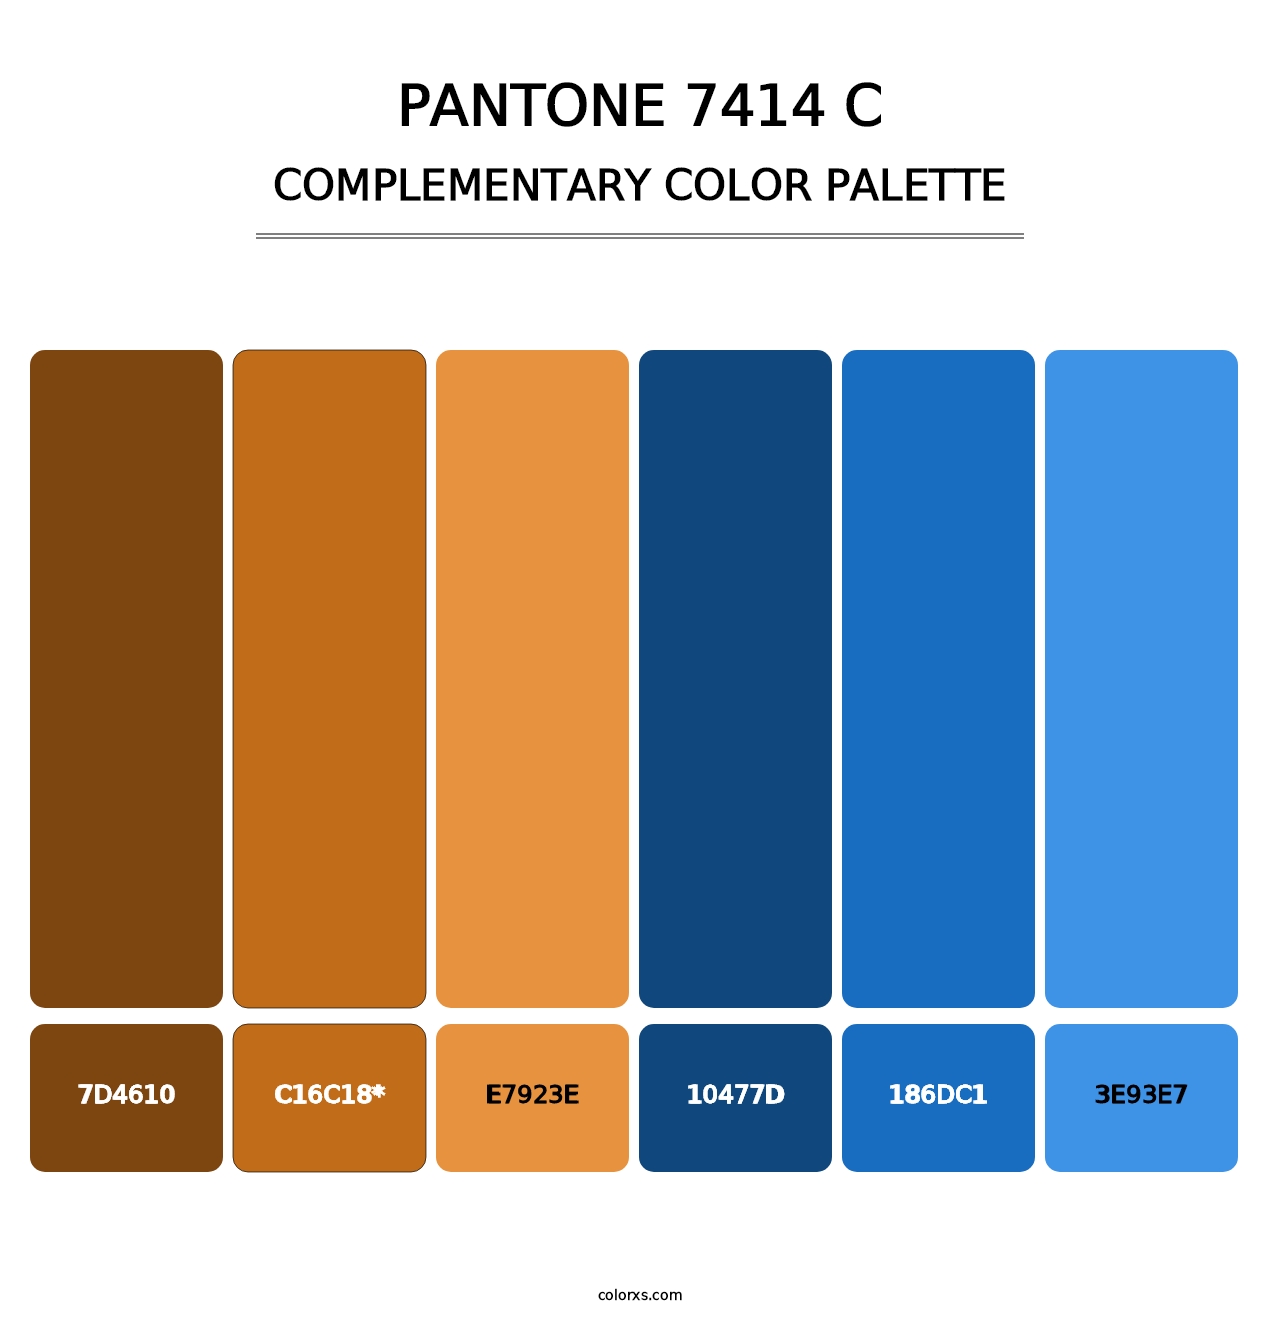 PANTONE 7414 C - Complementary Color Palette